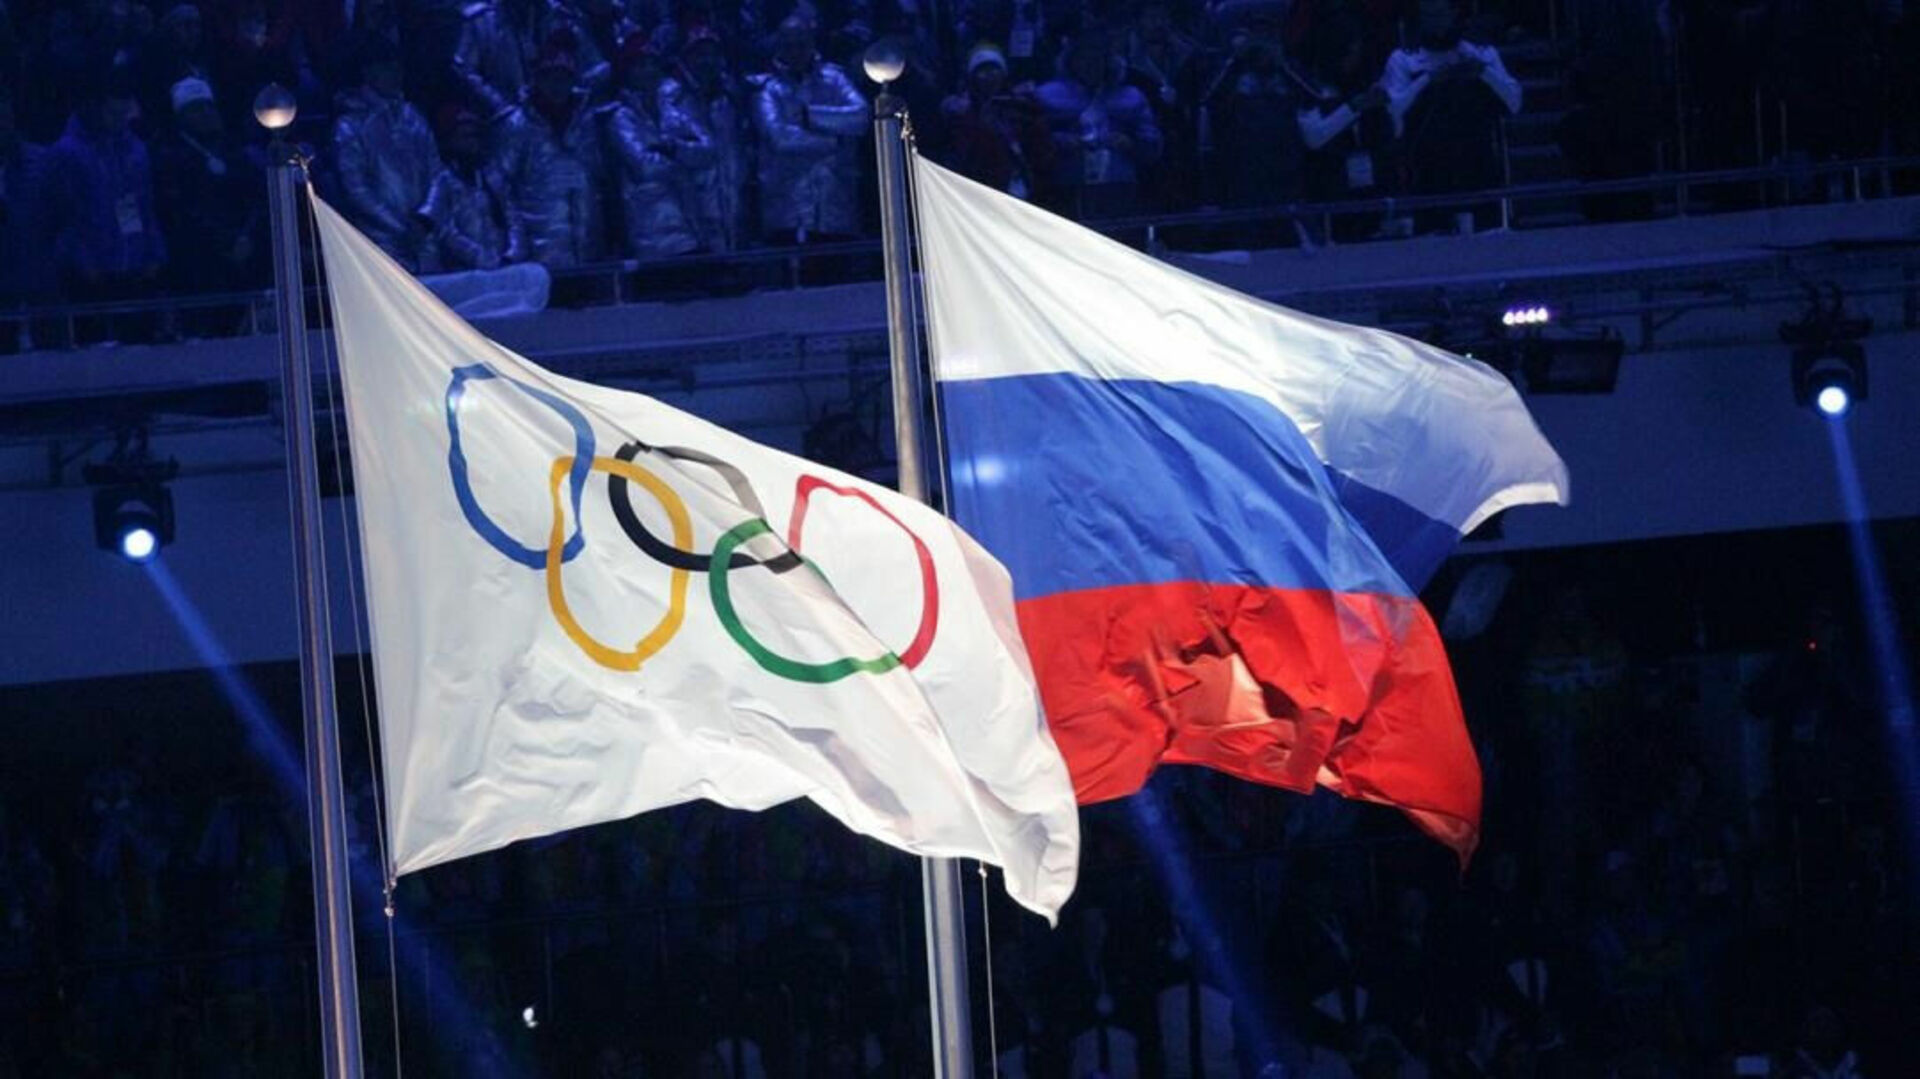 Почему флаг на олимпиаде. Флаг олимпийского комитета России. Олимпийские игры в России. Российский флаг на Олимпиаде.